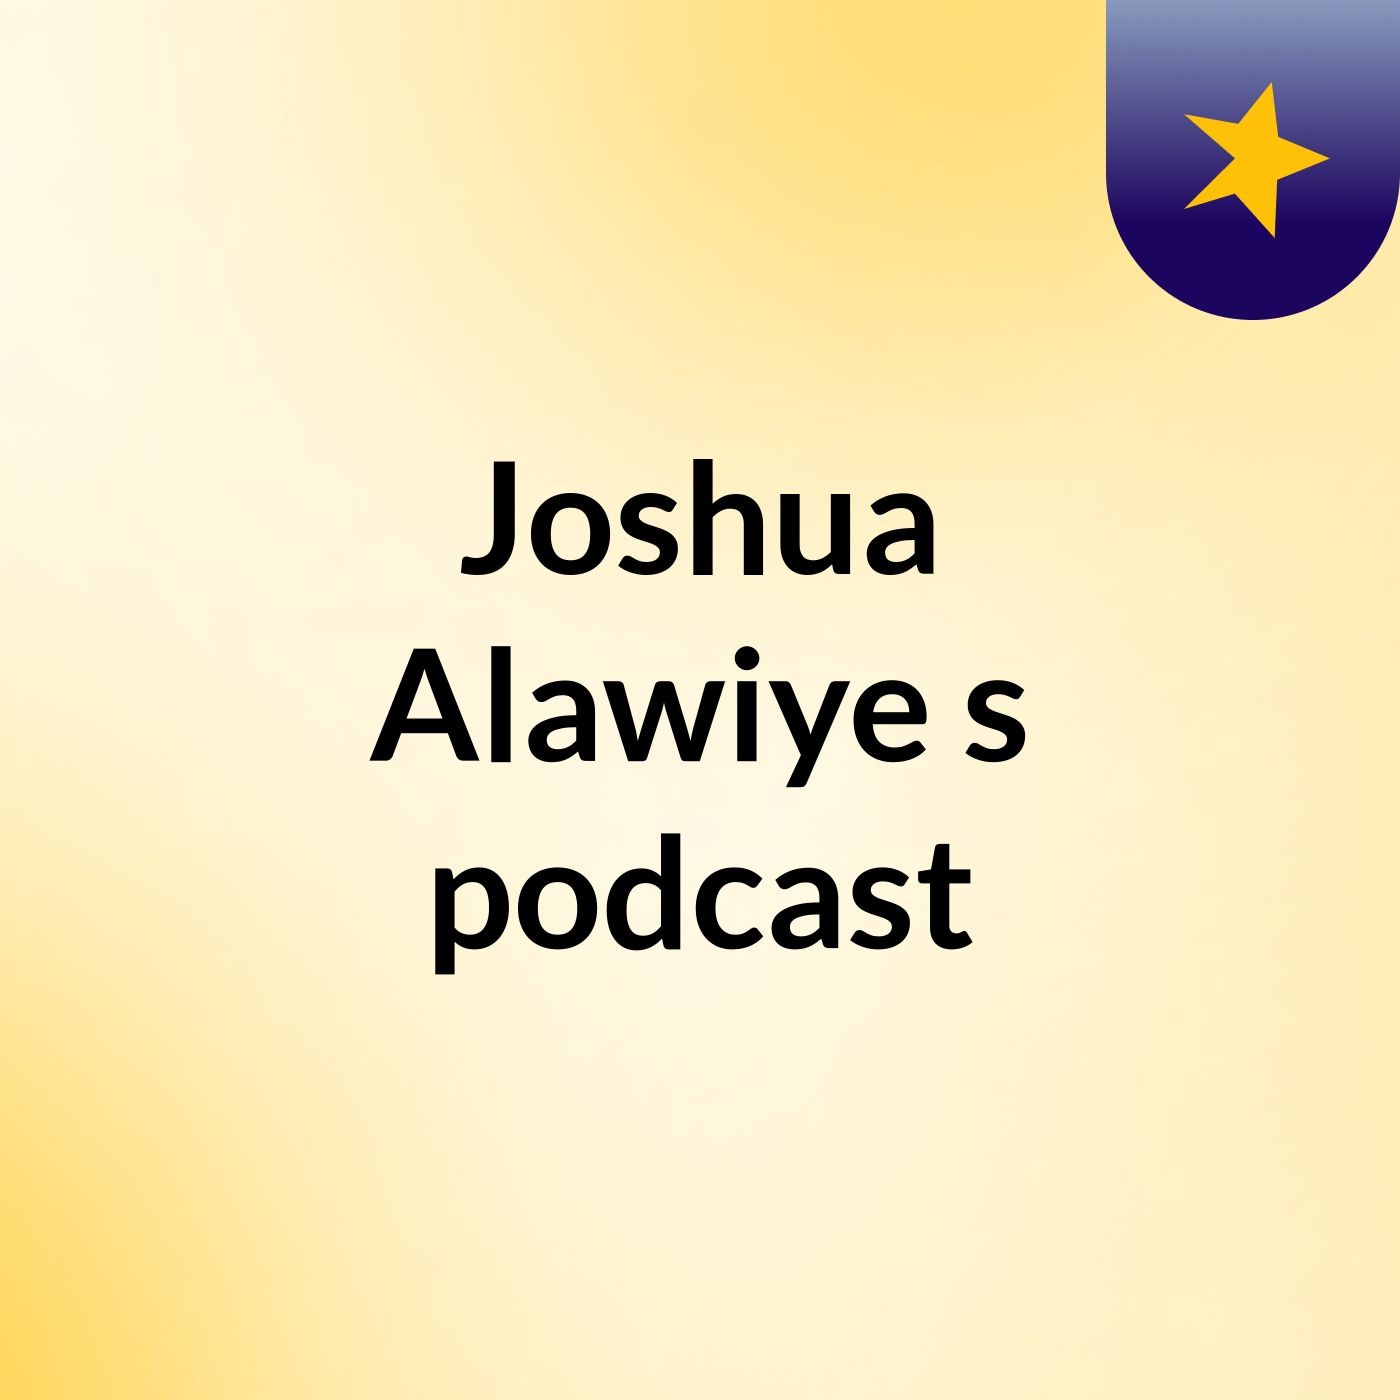 Joshua Alawiye's podcast